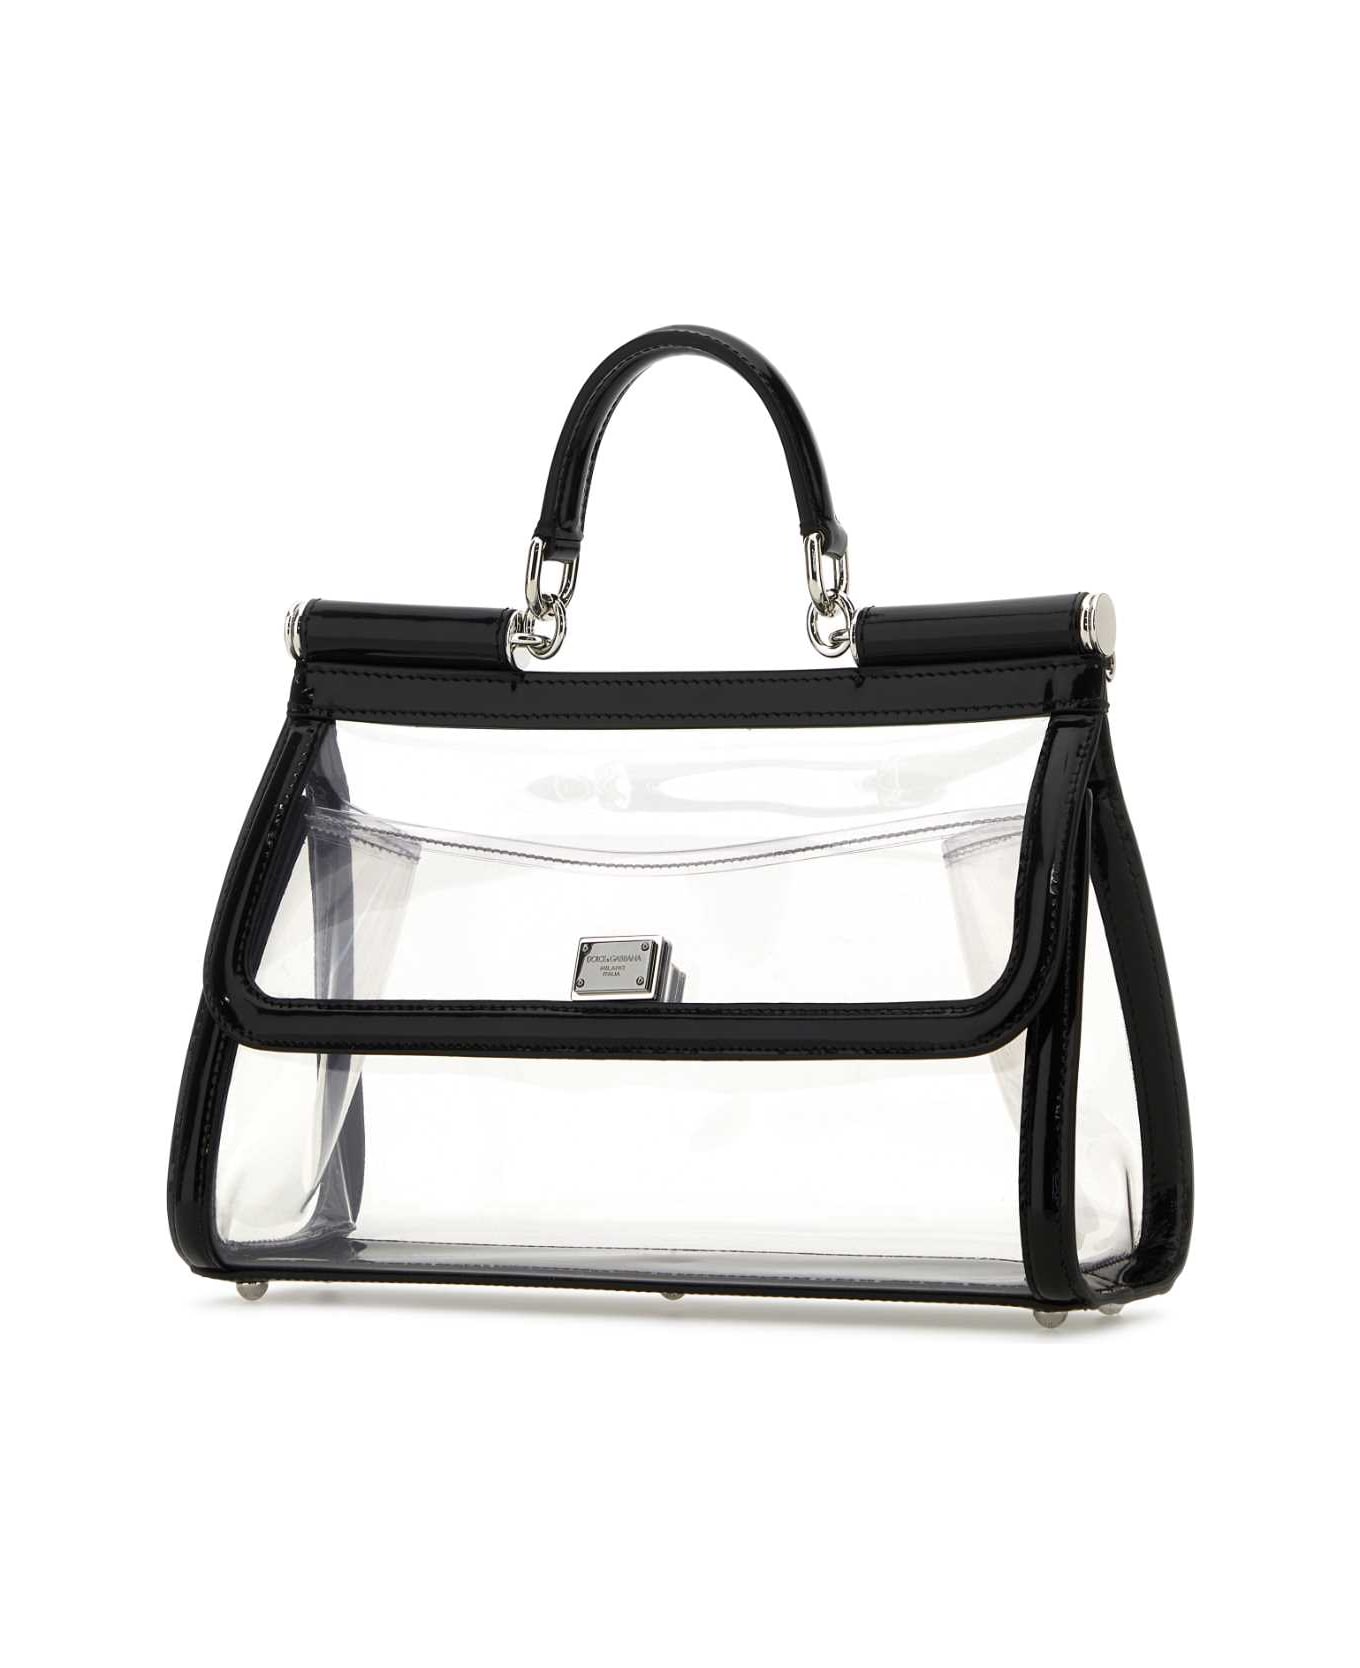 Dolce & Gabbana Two-tone Pvc And Leather Medium Sicily Handbag - TRASPARENTENERO